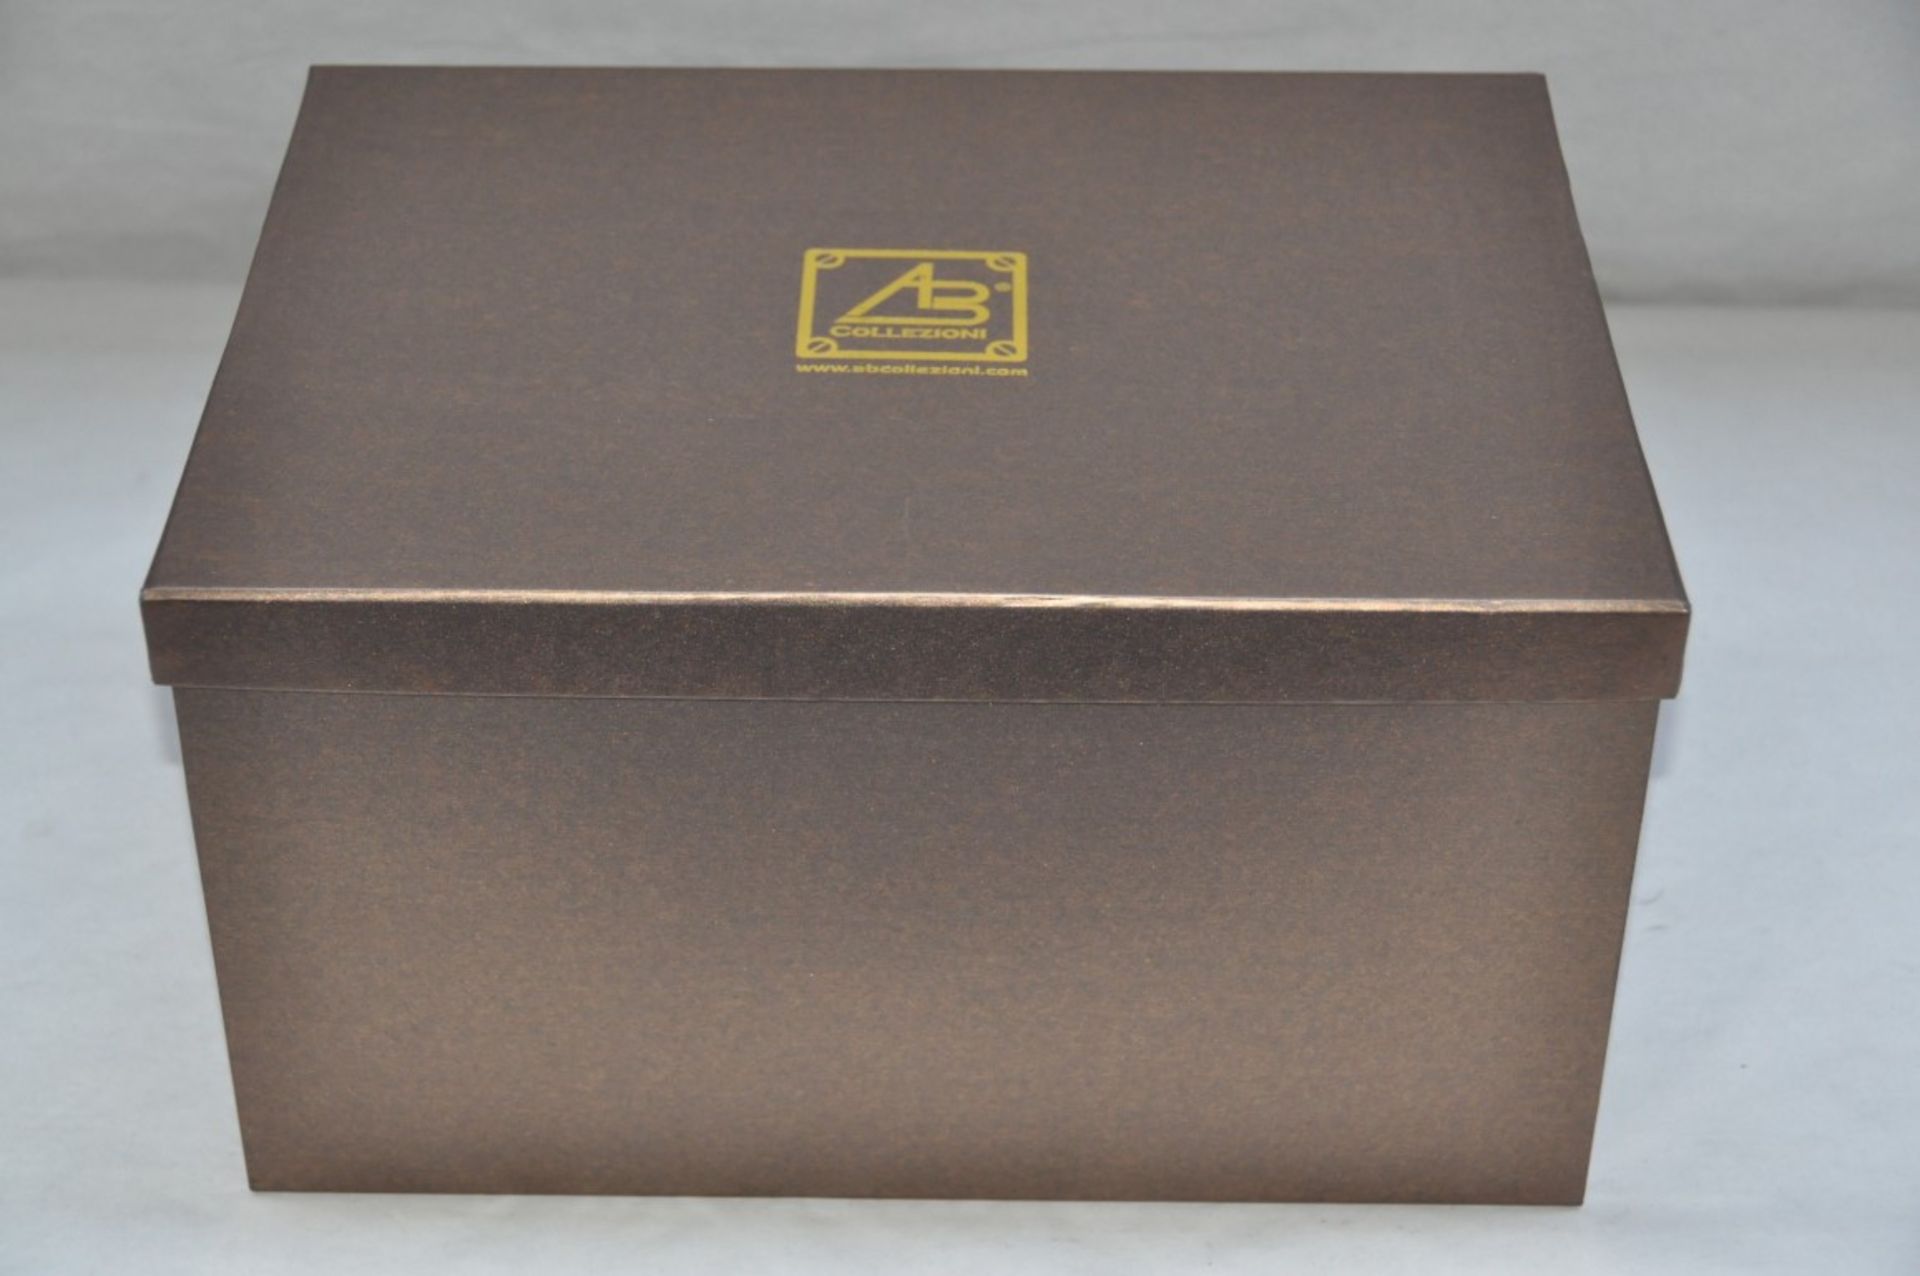 1 x "AB Collezioni" Italian Genuine Leather & Suede Luxury Jewellery Box (34044) - Ref LT000 - - Image 4 of 9